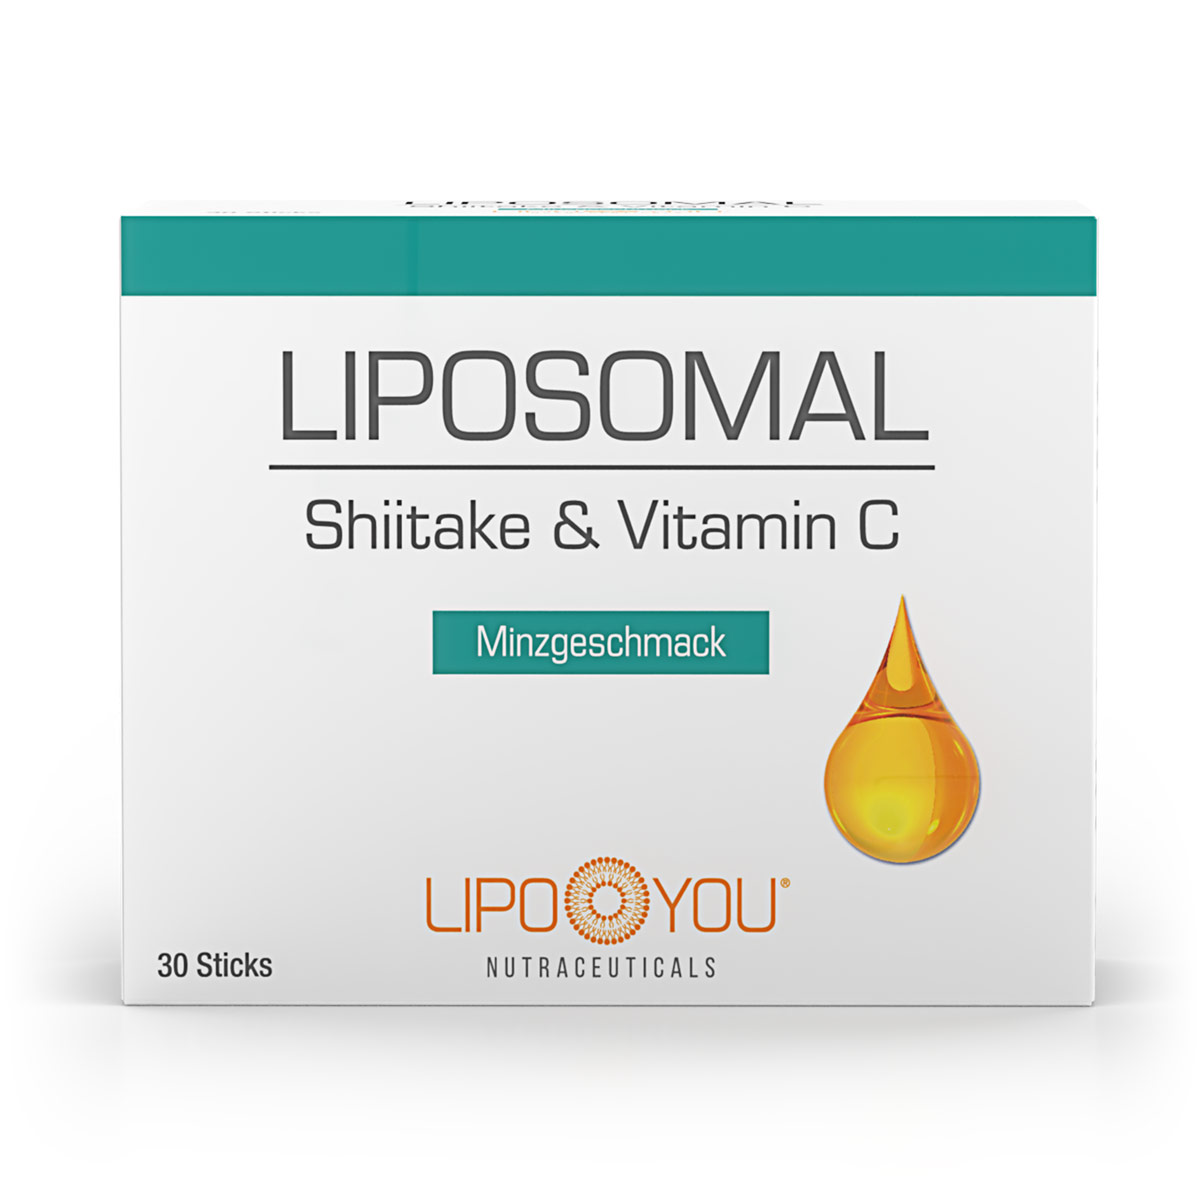 LIPOSOMAL Shiitake & Vitamin C Produktverpackung